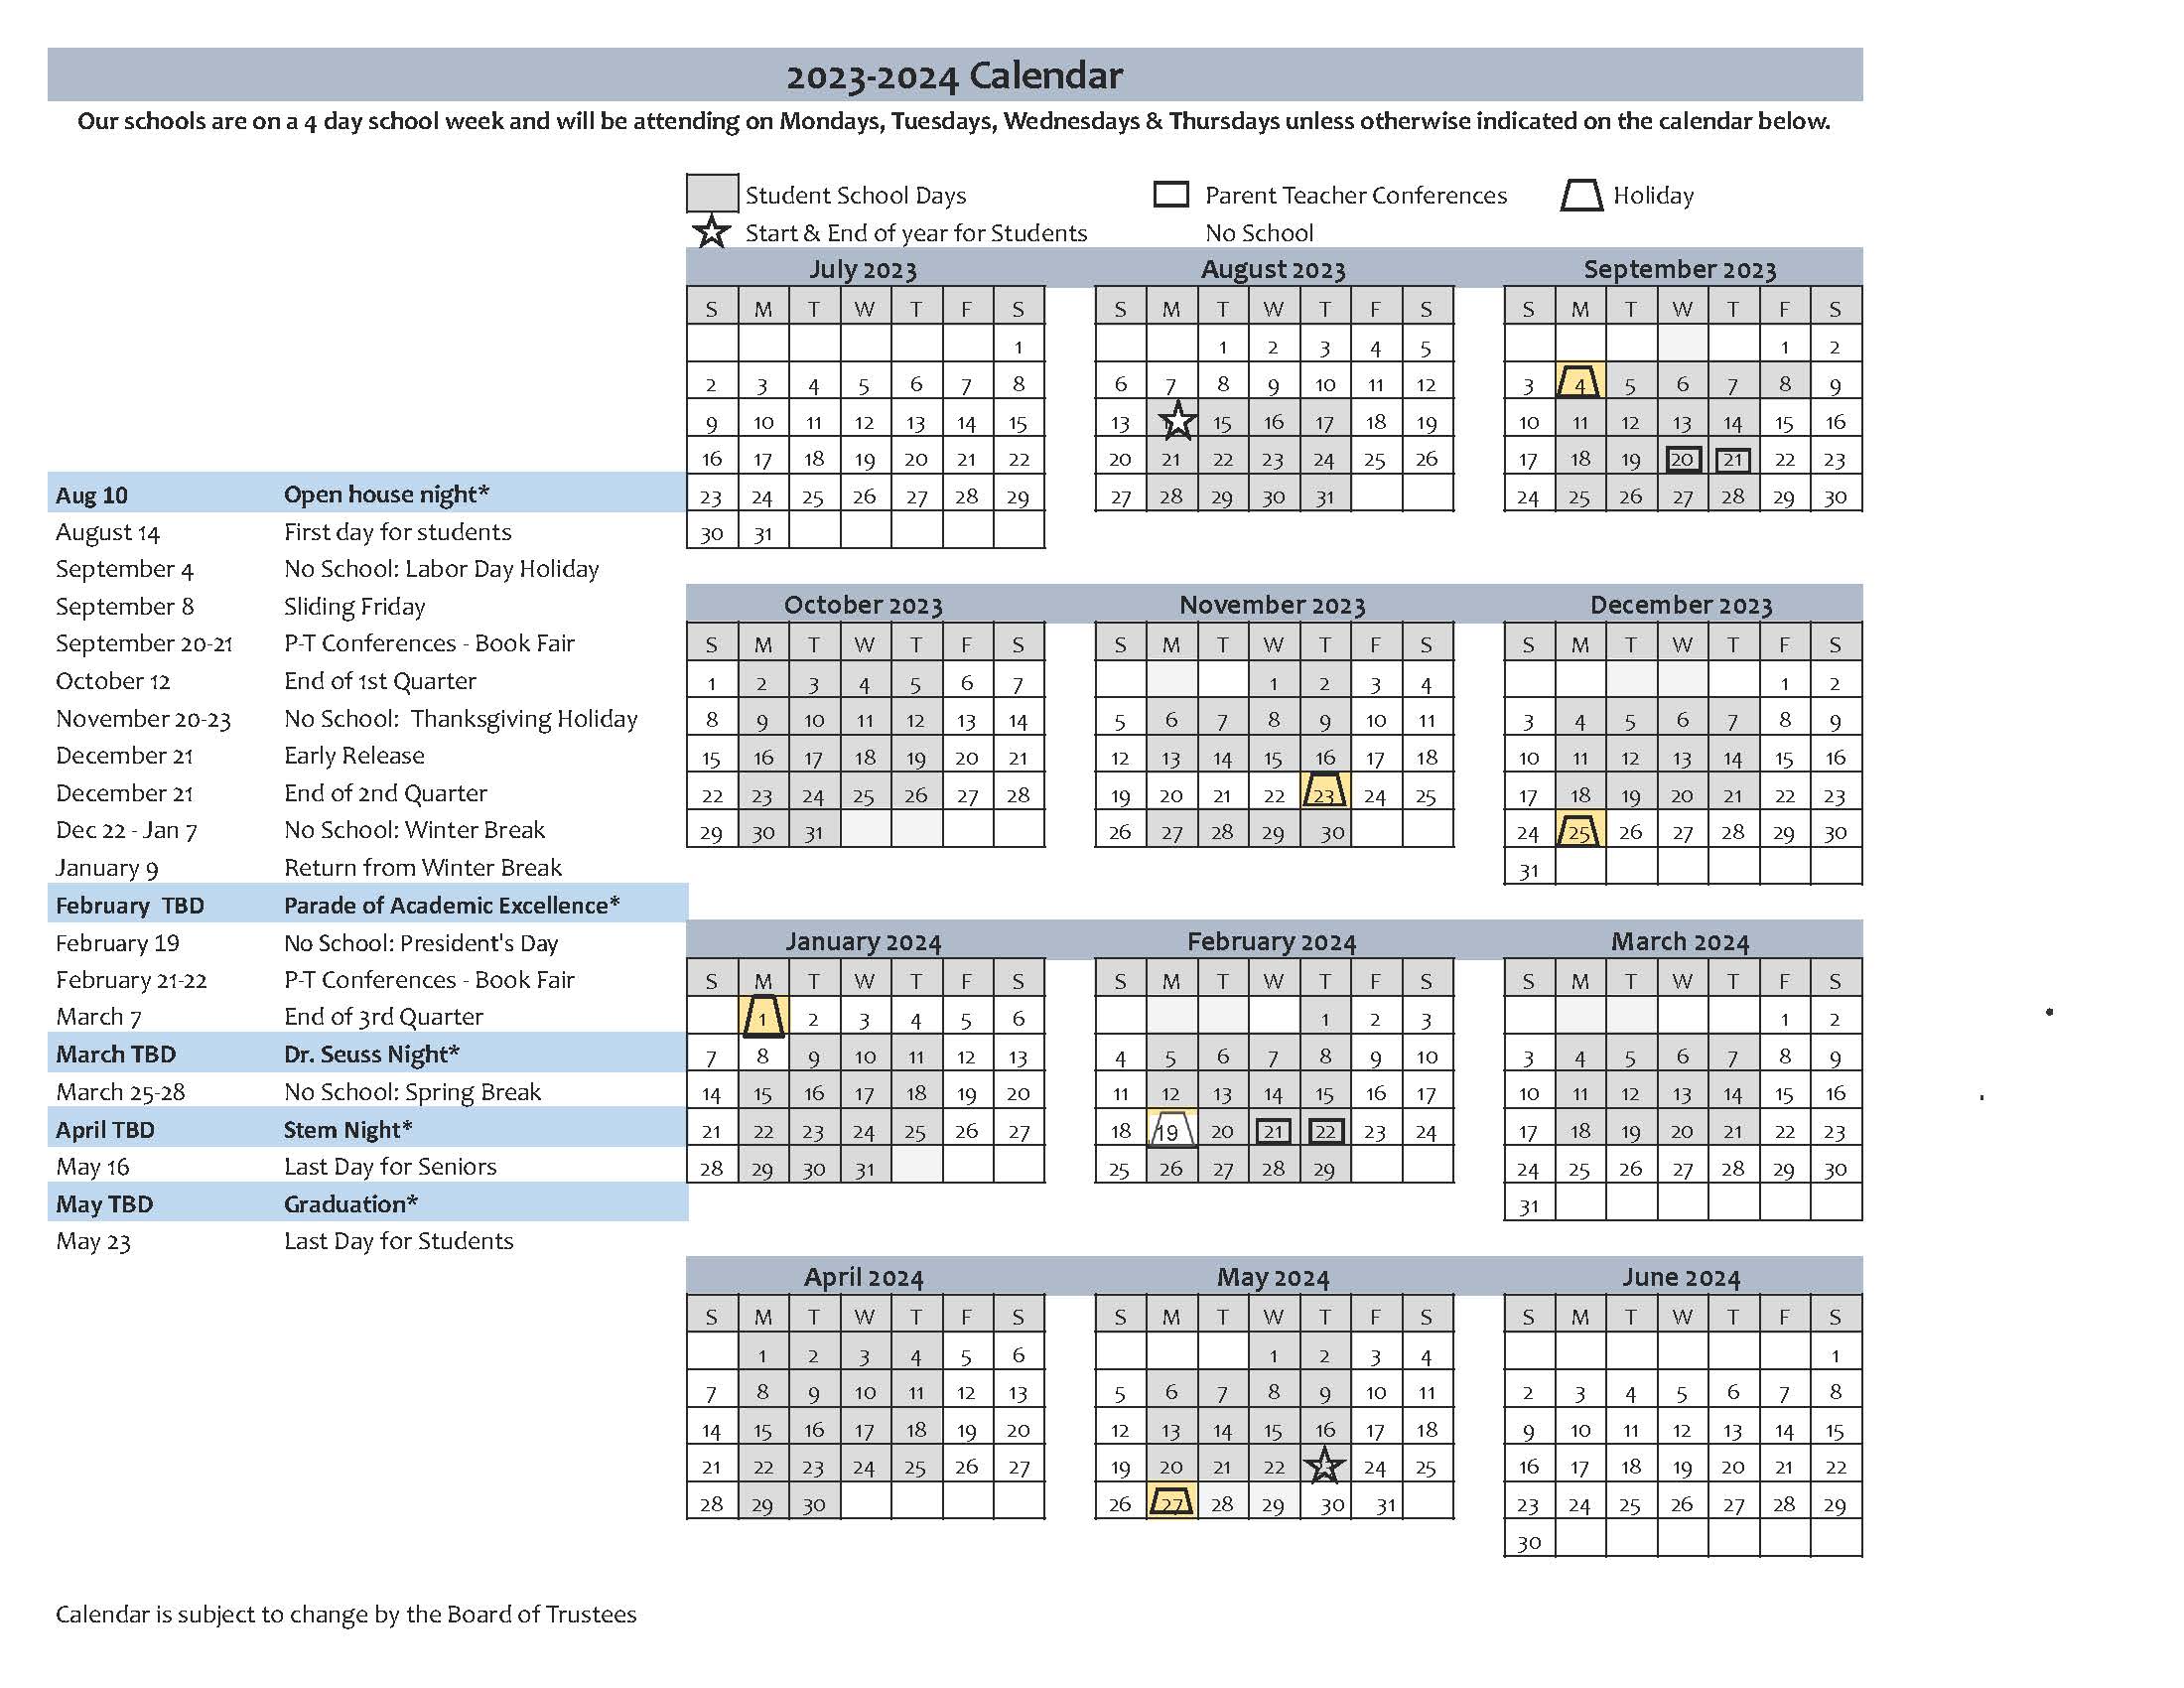  Student Calendar 2023-2024